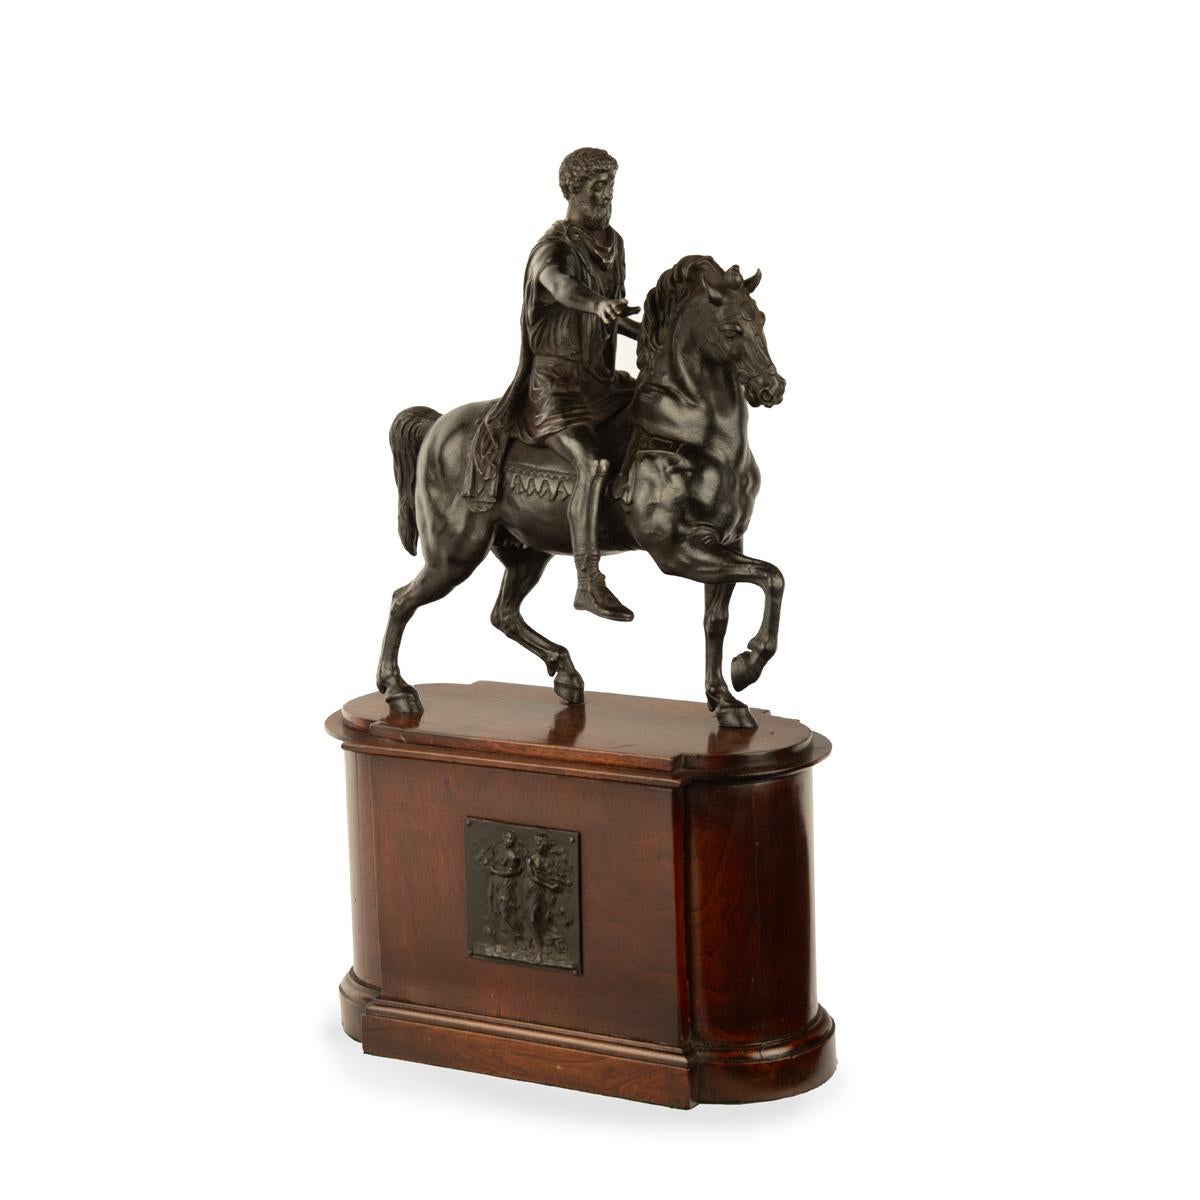 A Grand Tour equestrian bronze of Marcus Aurelius, after Hopfgarten 4